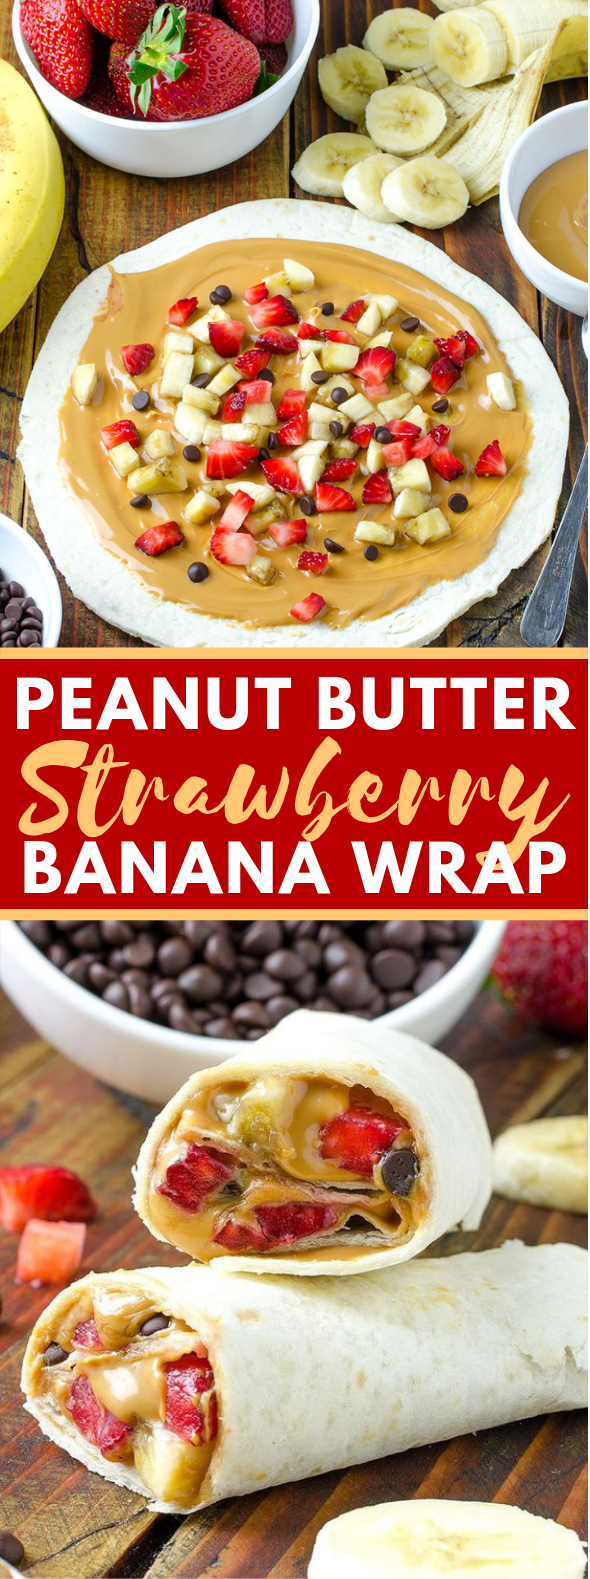 Healthy Peanut Butter, Strawberry, Banana Wrap Recipe #breakfast #healthysnack